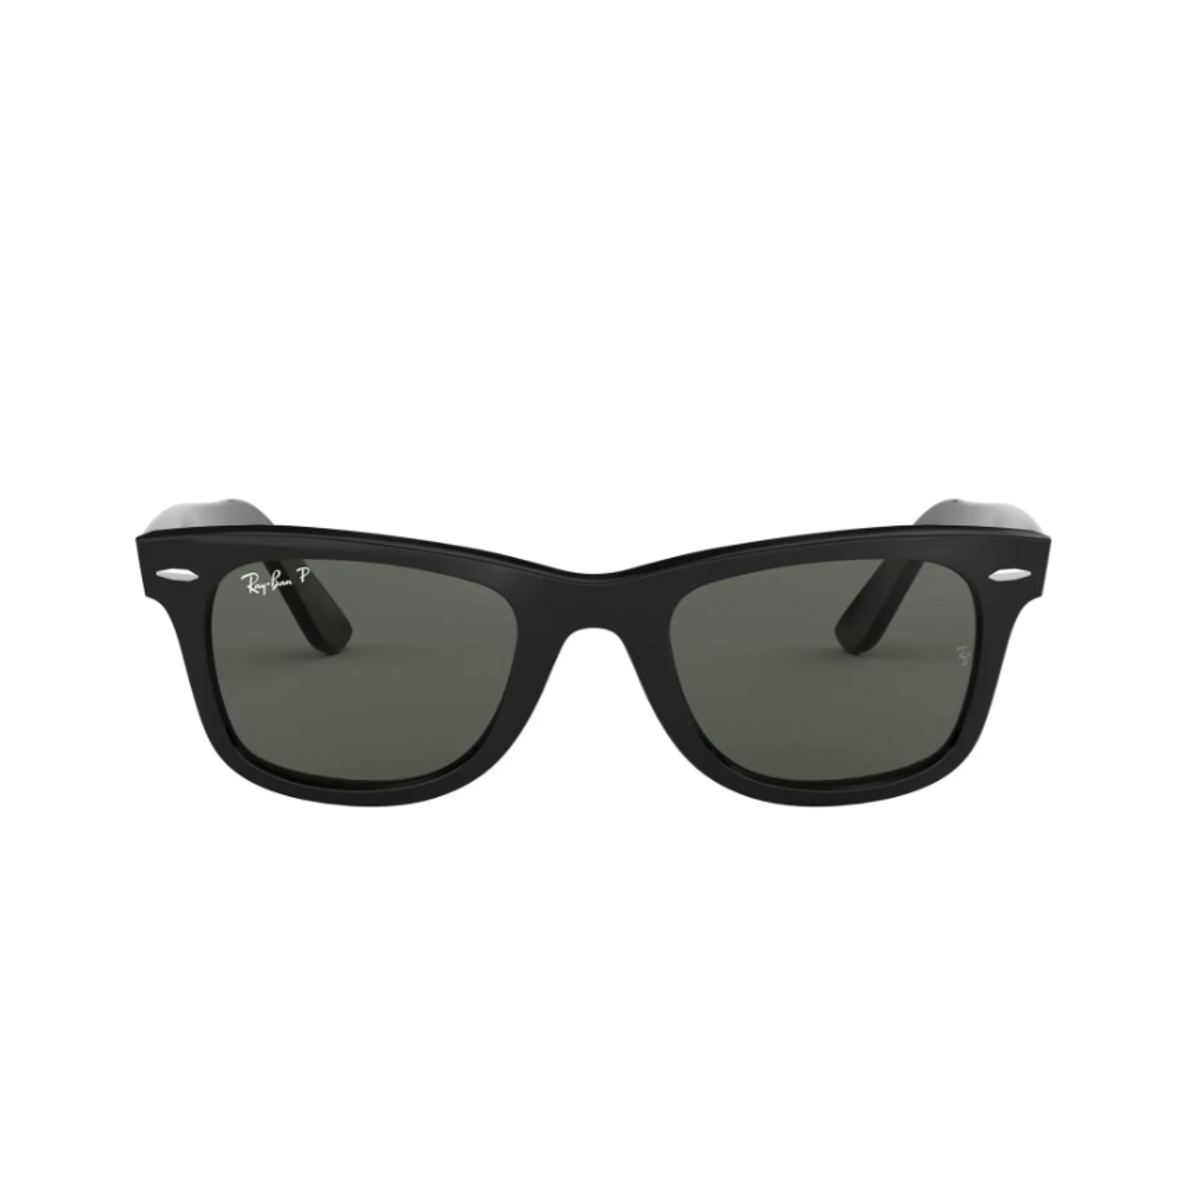 Standard Classic Wayfarer 50mm Polarized Sunglasses